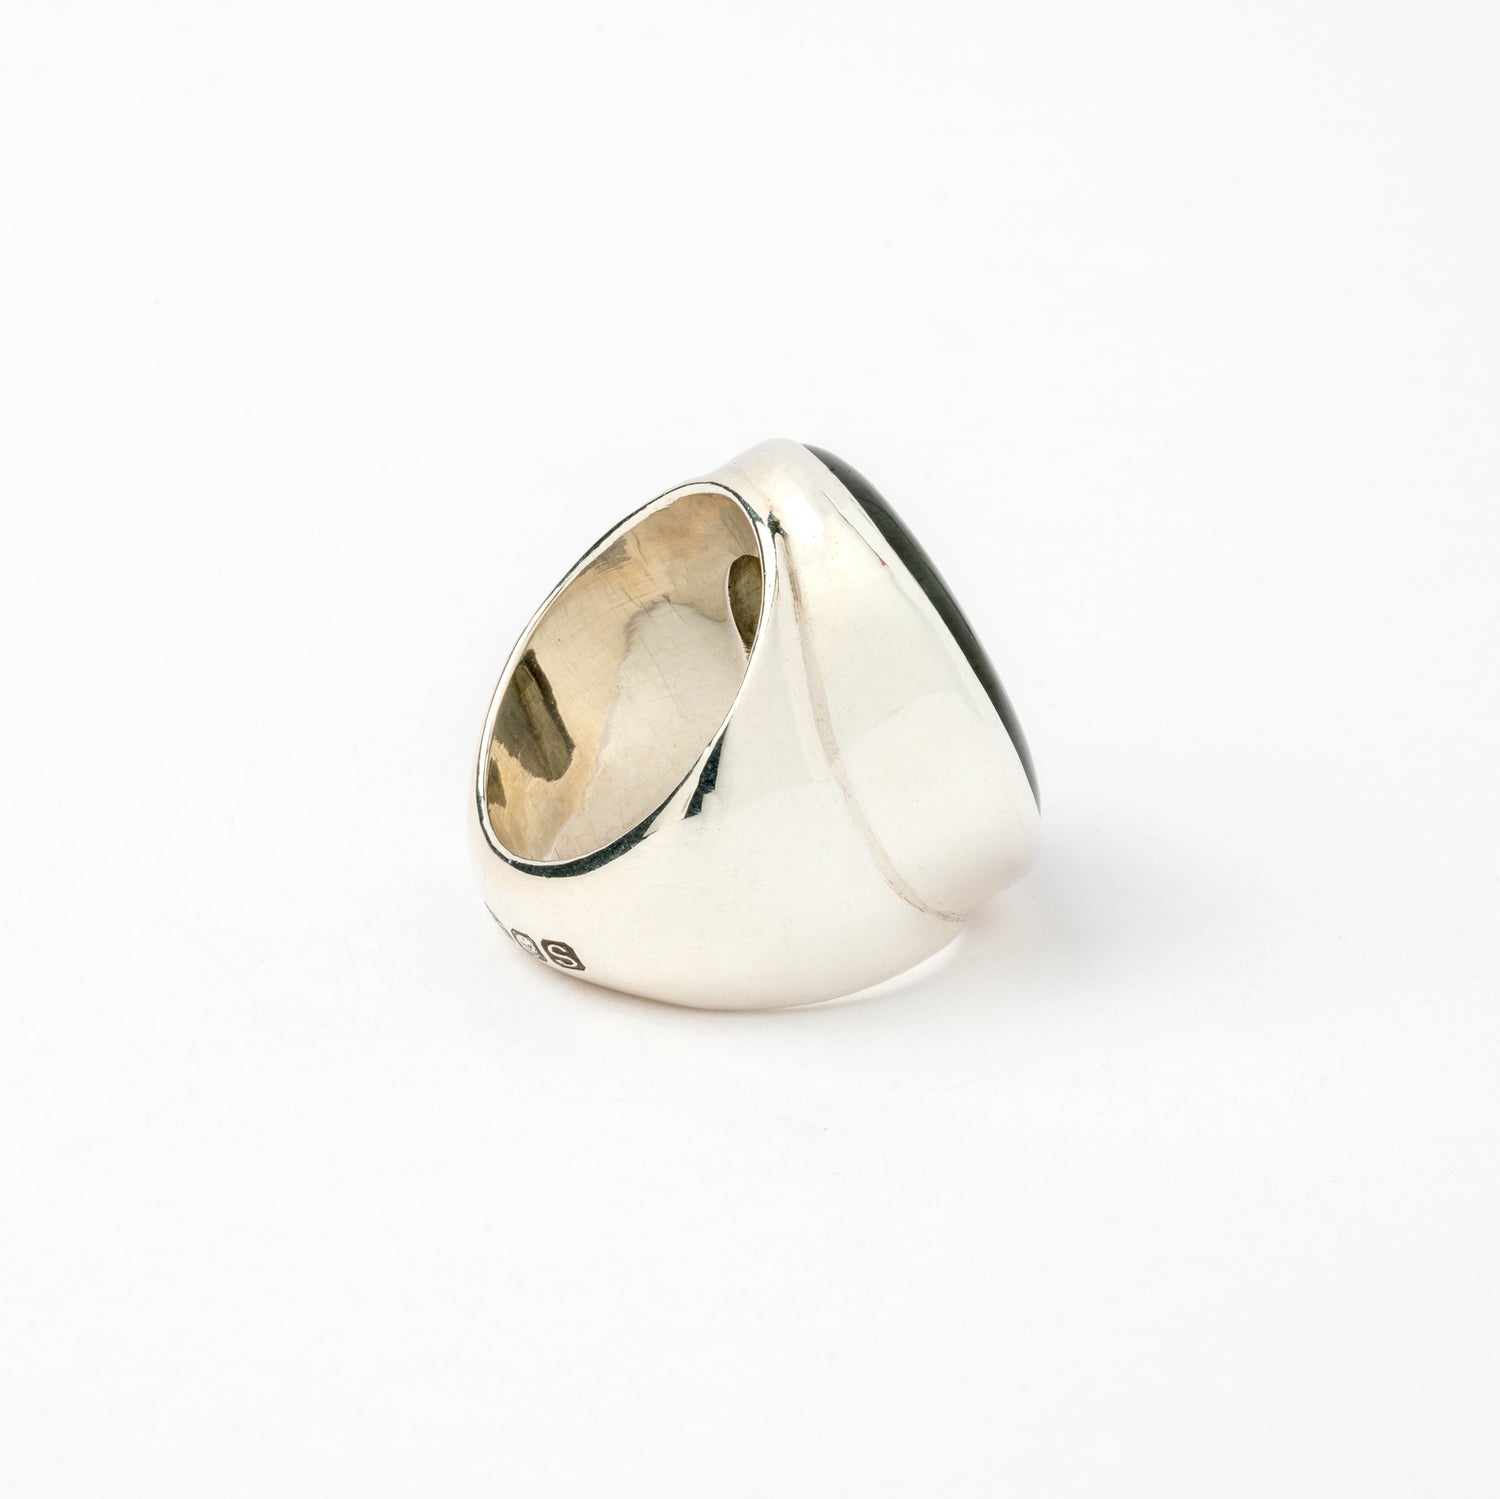 Hallmarked Silver Ring with Labradorite